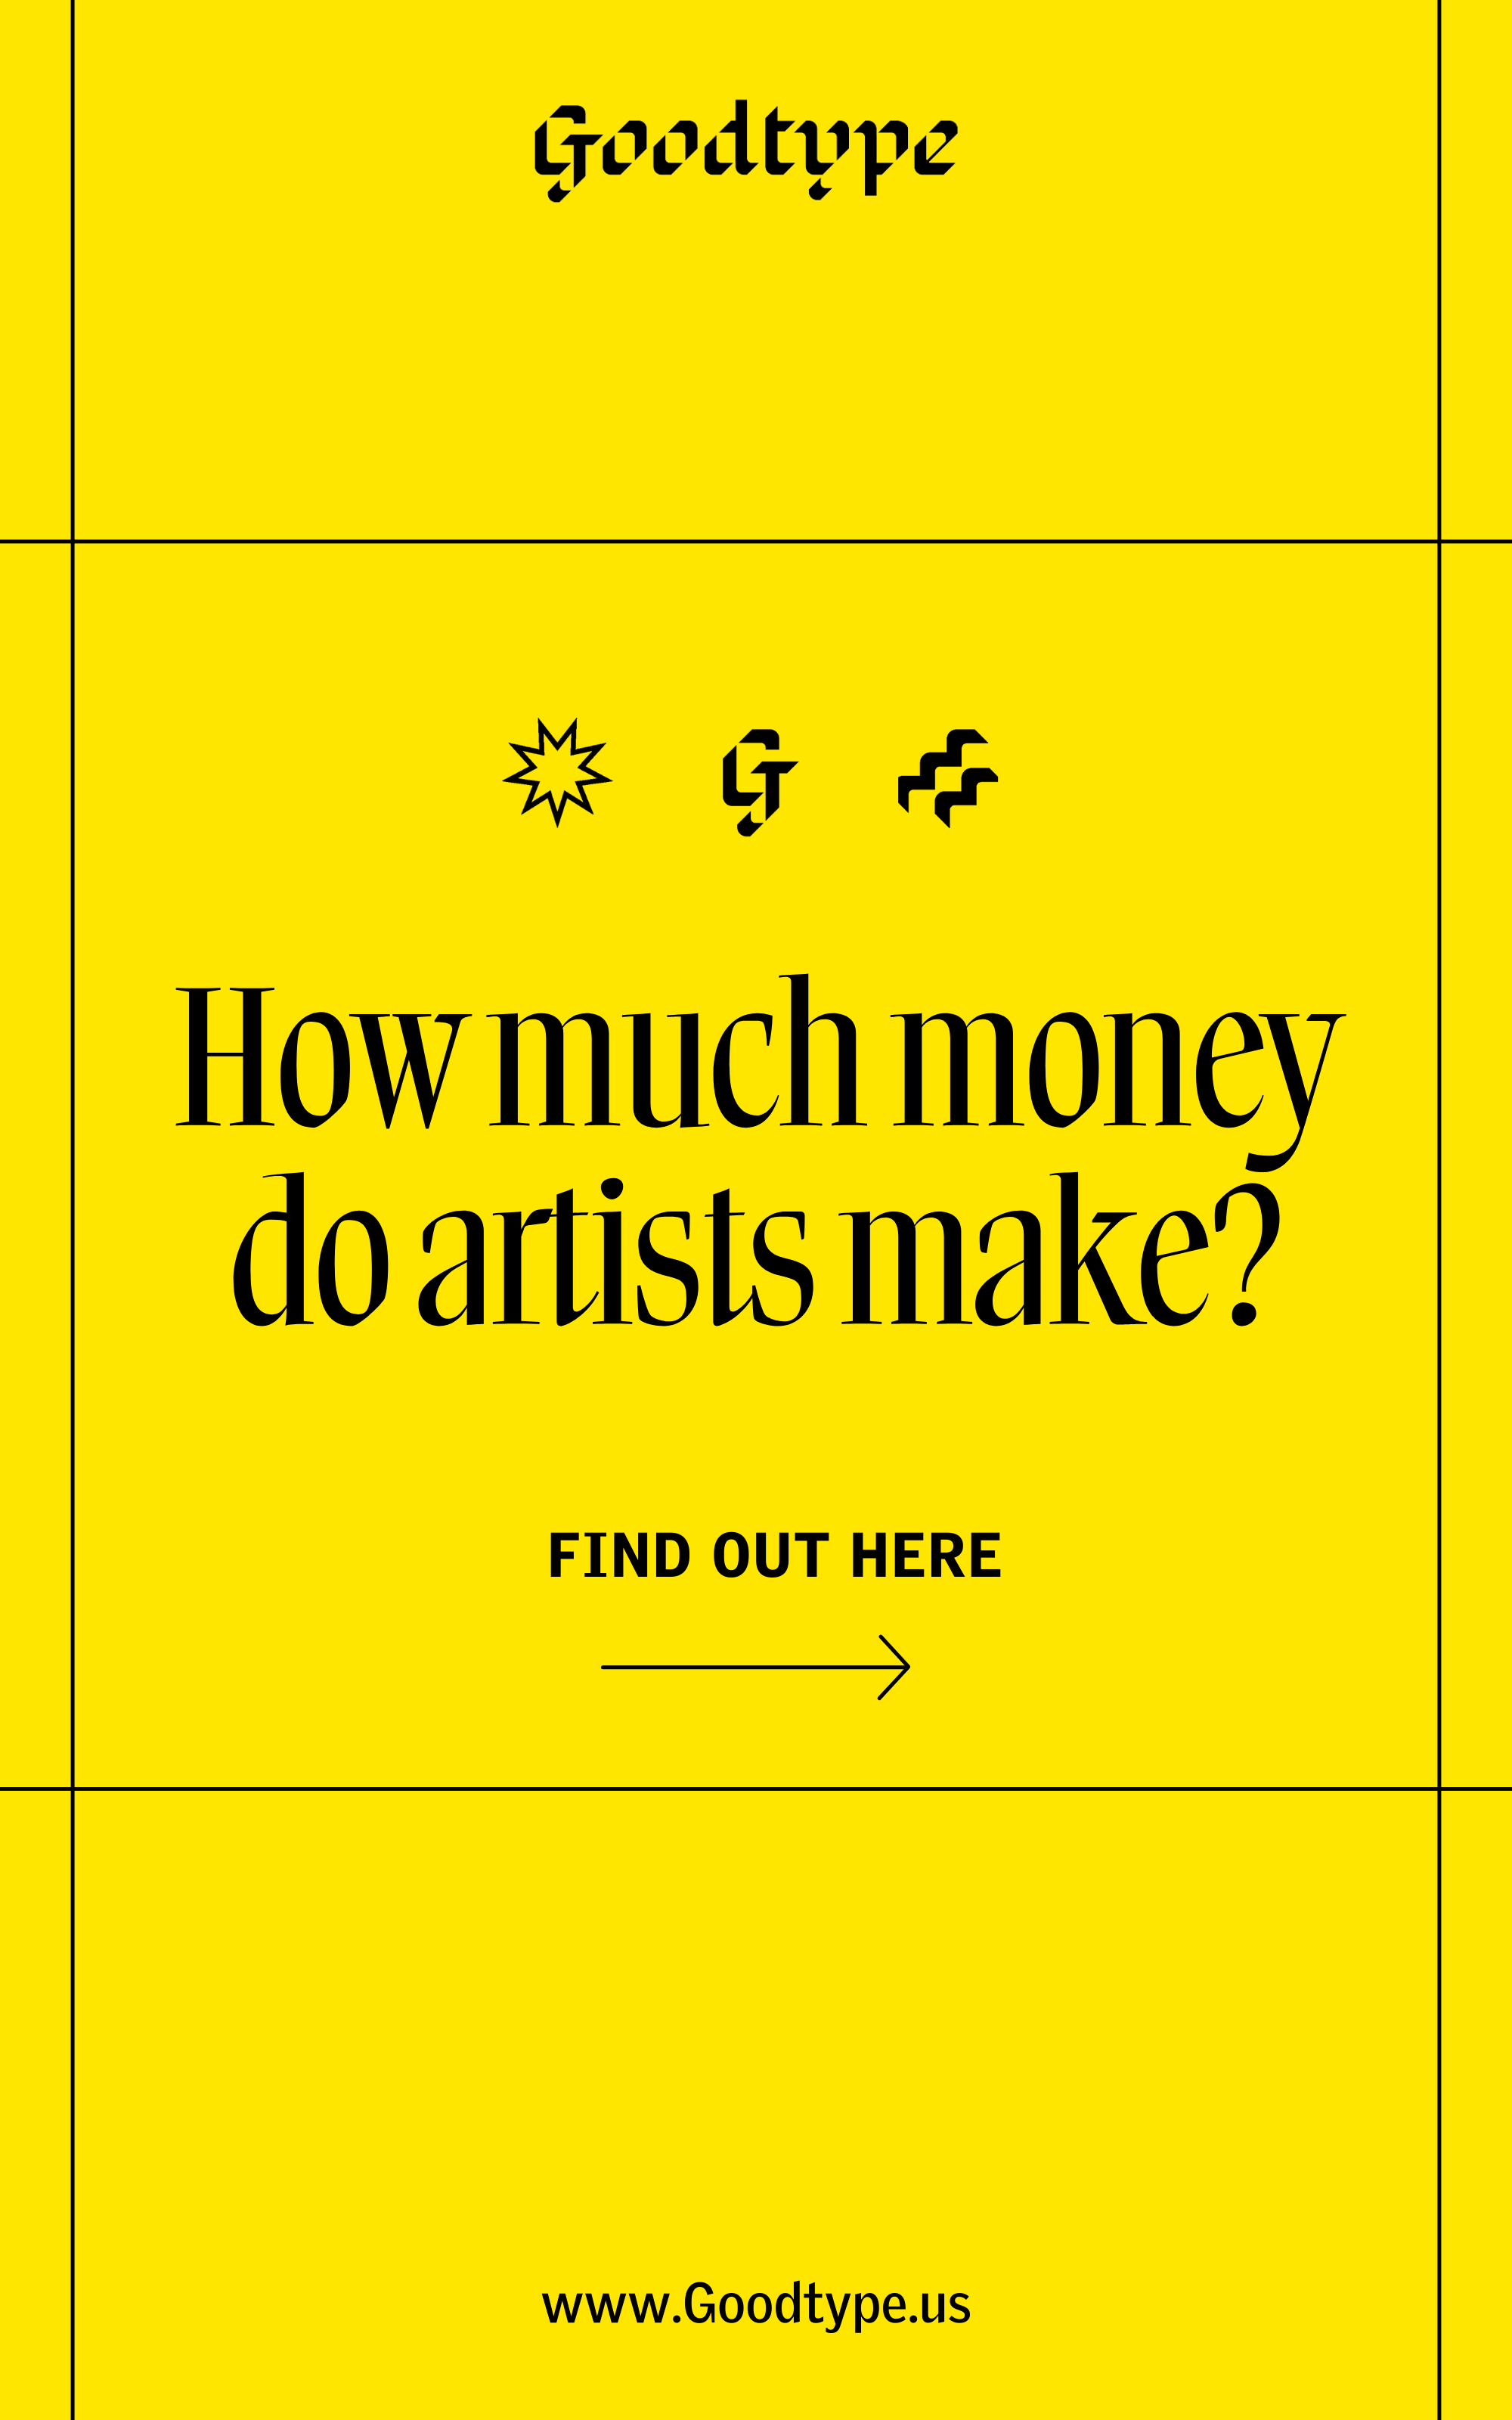 How Artists Make Money on